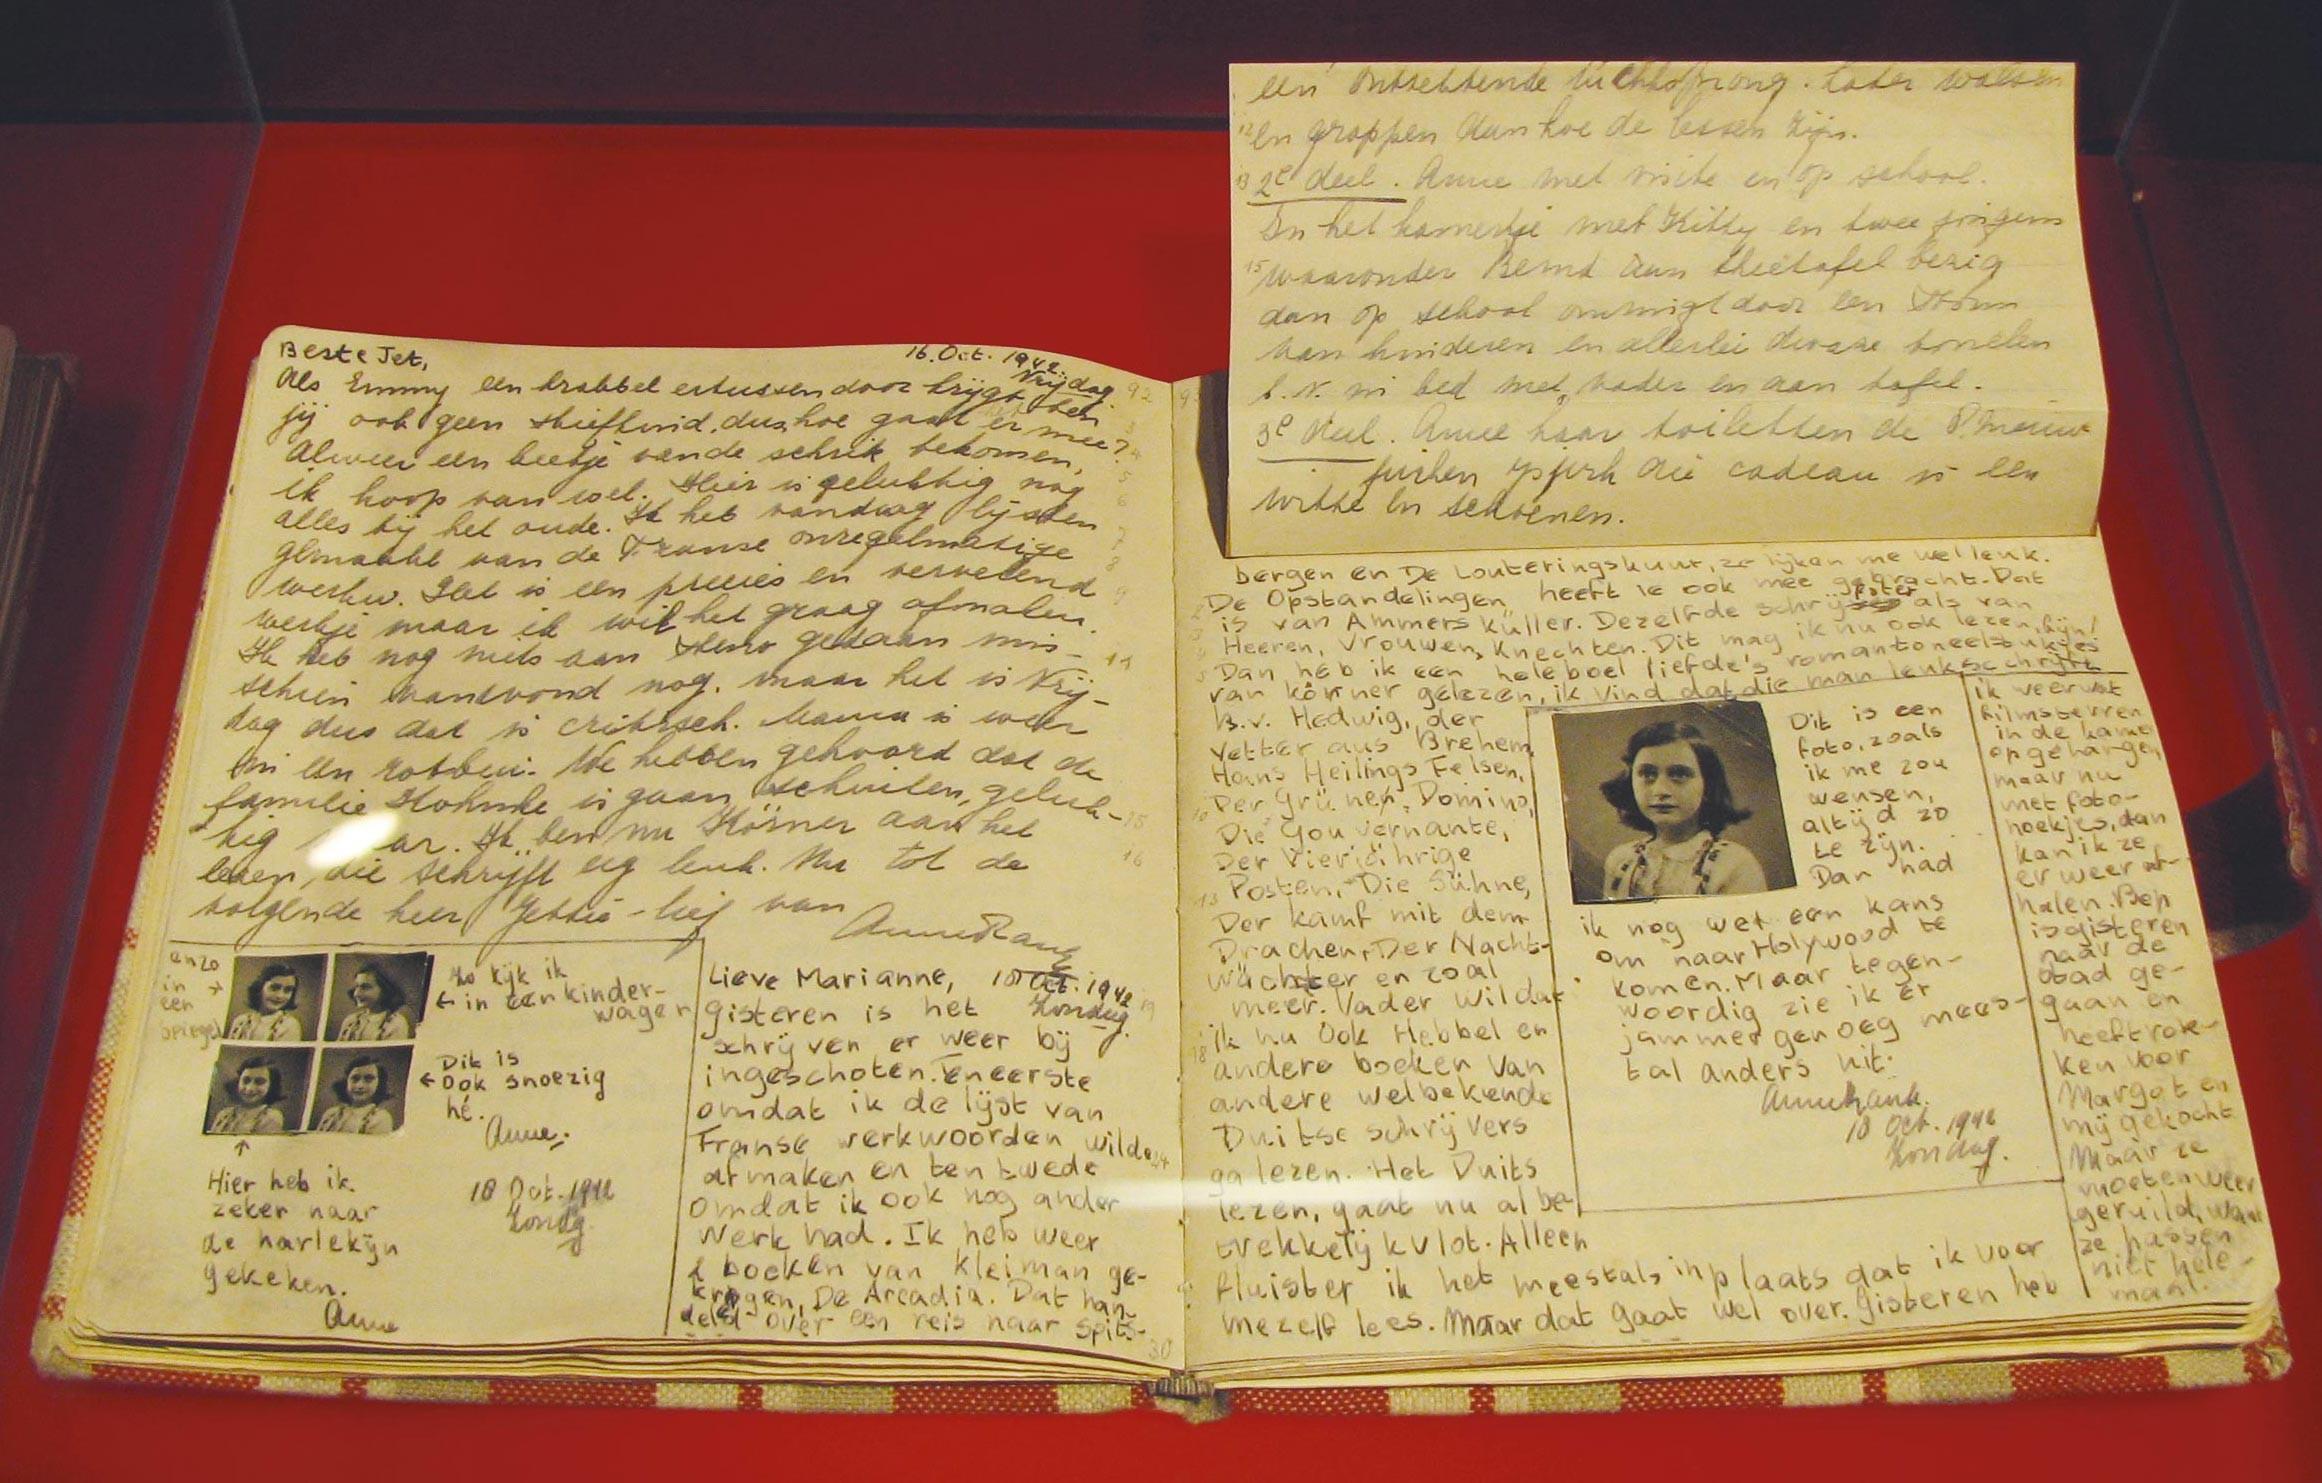 Journal d’Anne Frank